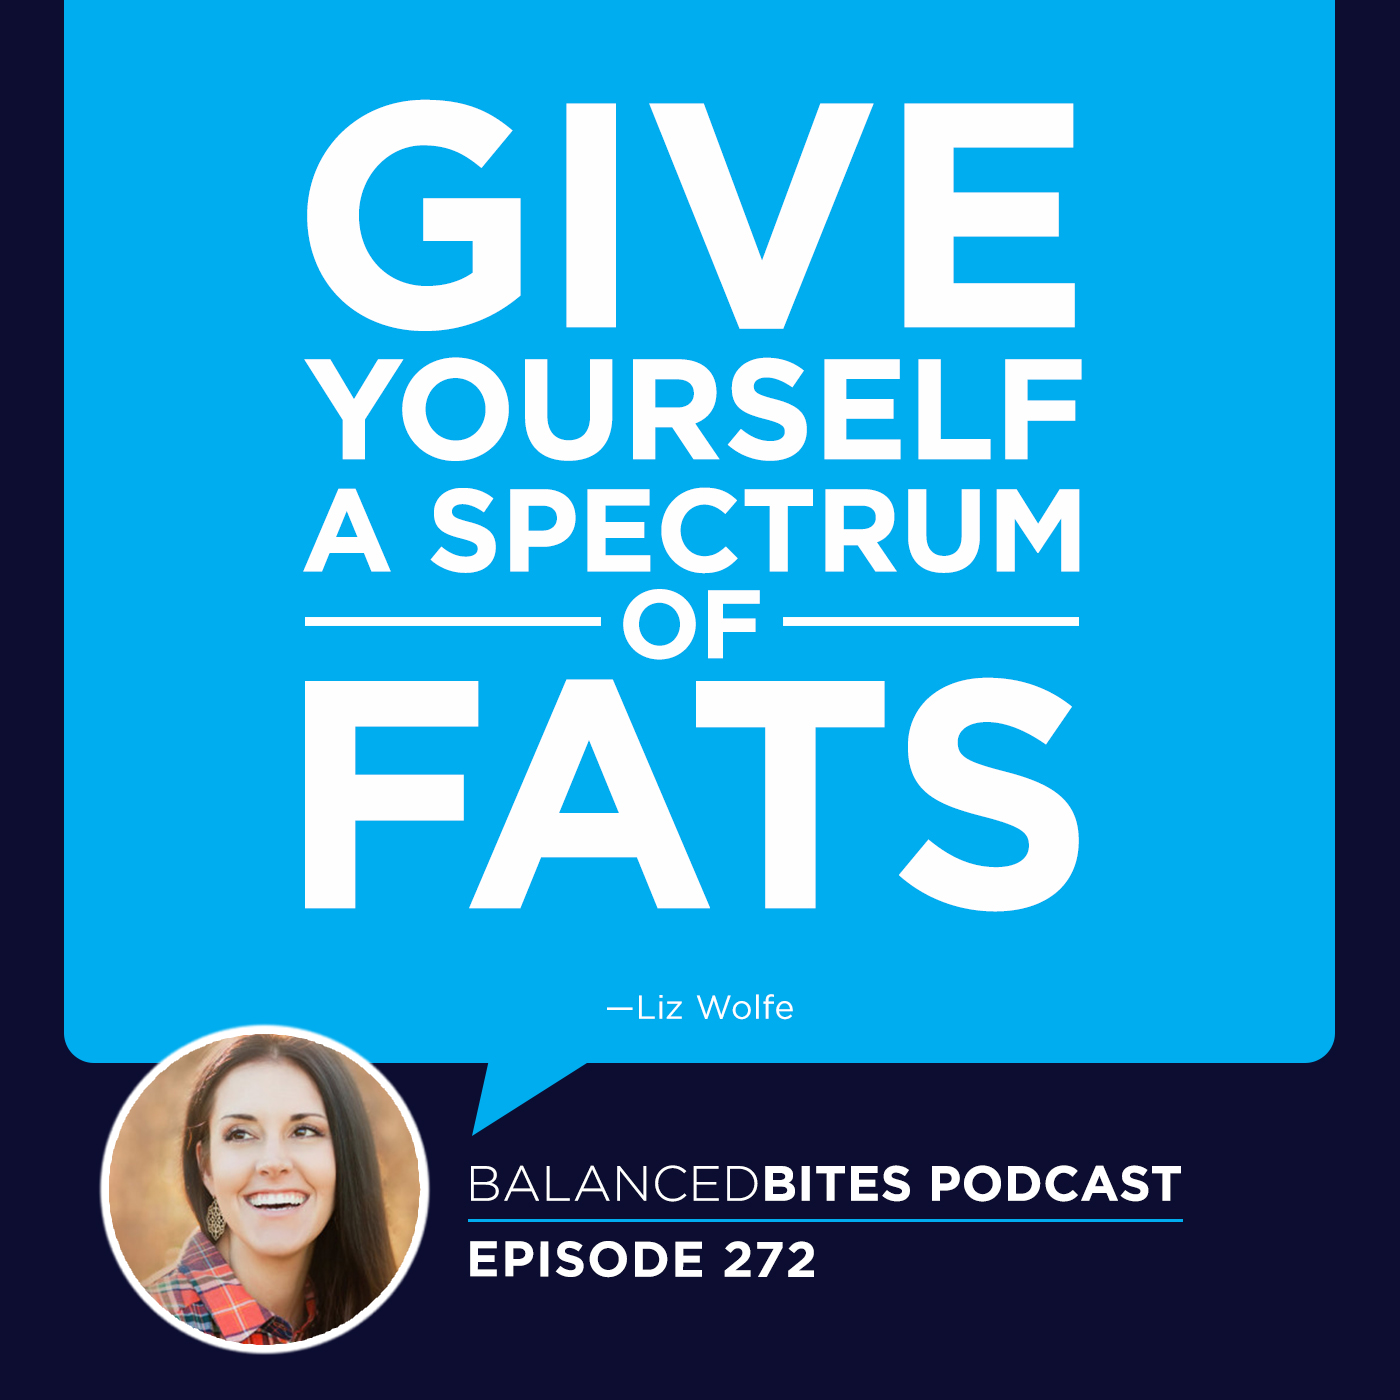 Fats & Oils - Diane Sanfilippo, Liz Wolfe | Balanced Bites